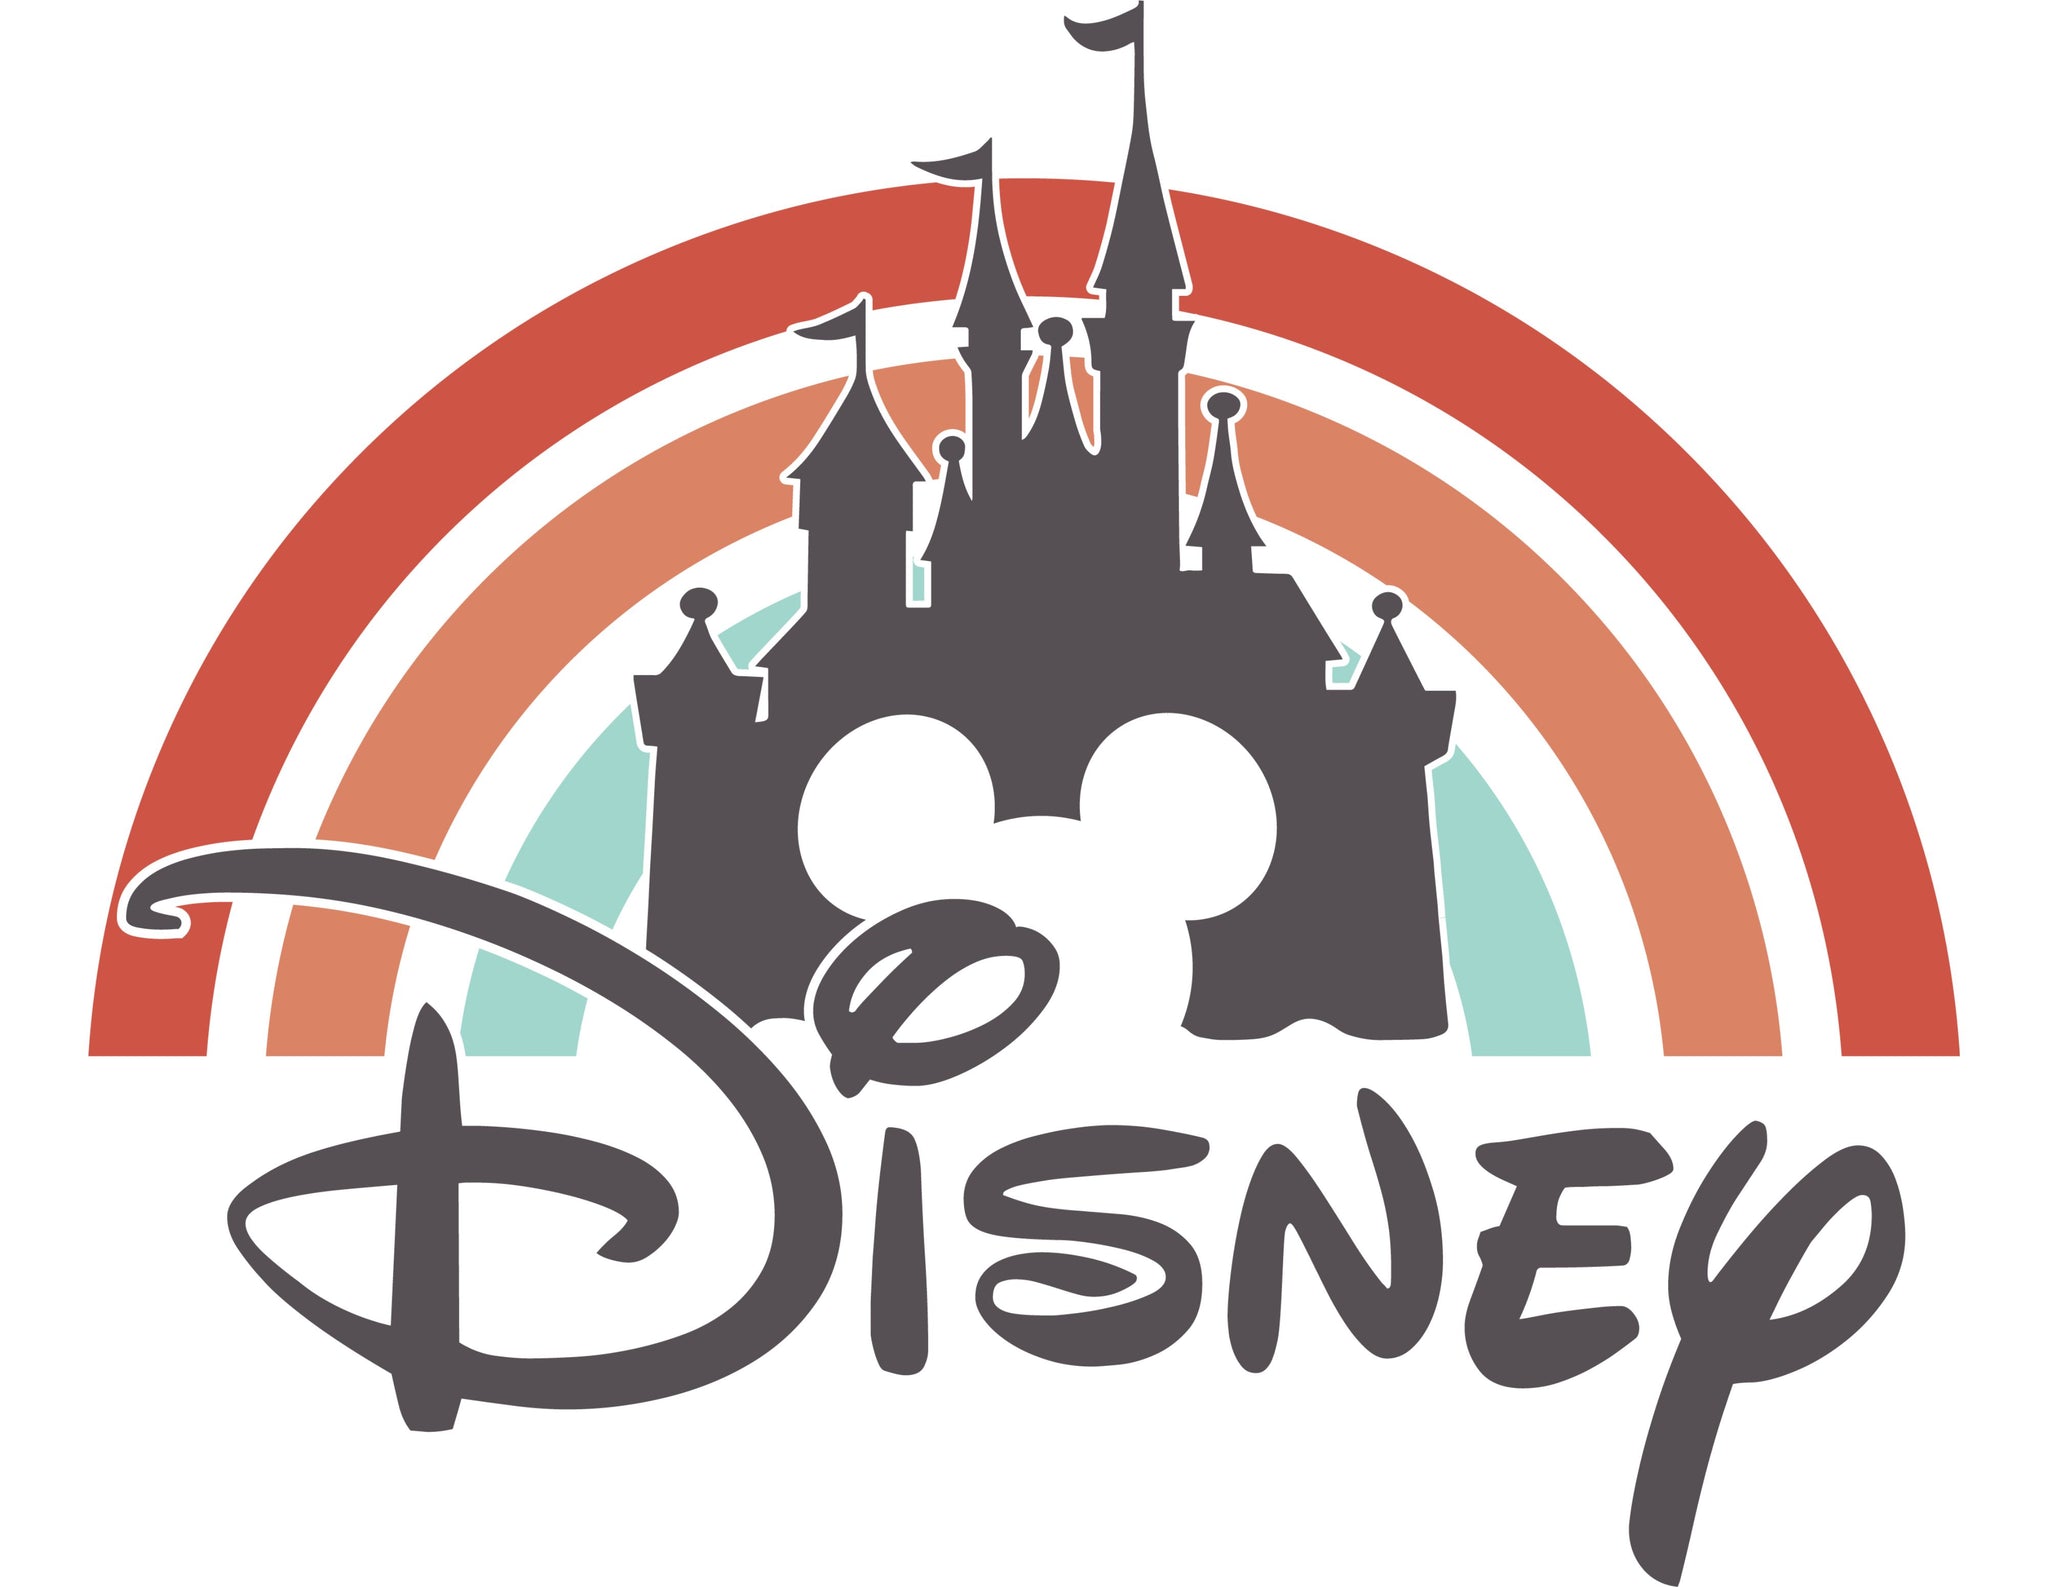 disney castle logo